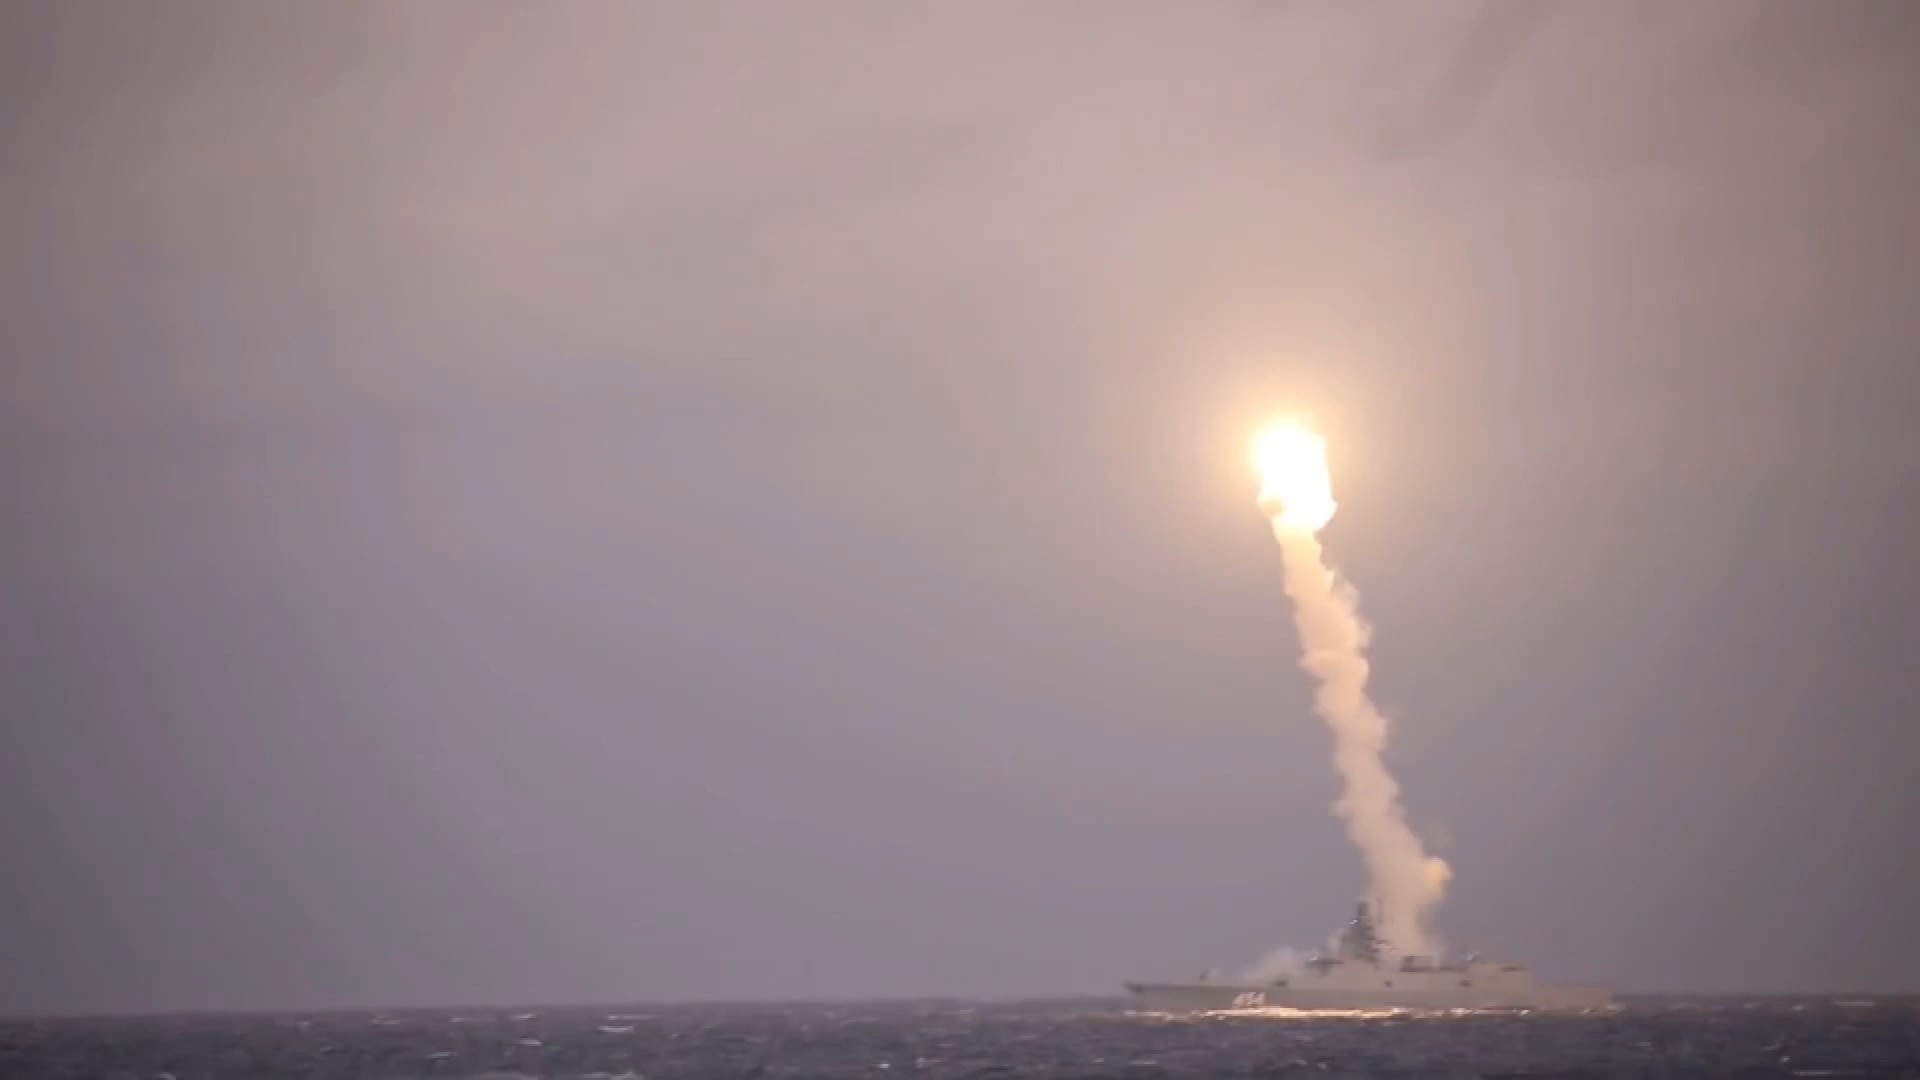 Russia threatens missiles in Ukraine dispute - NRK Eurex - Foreign News & Documentaries